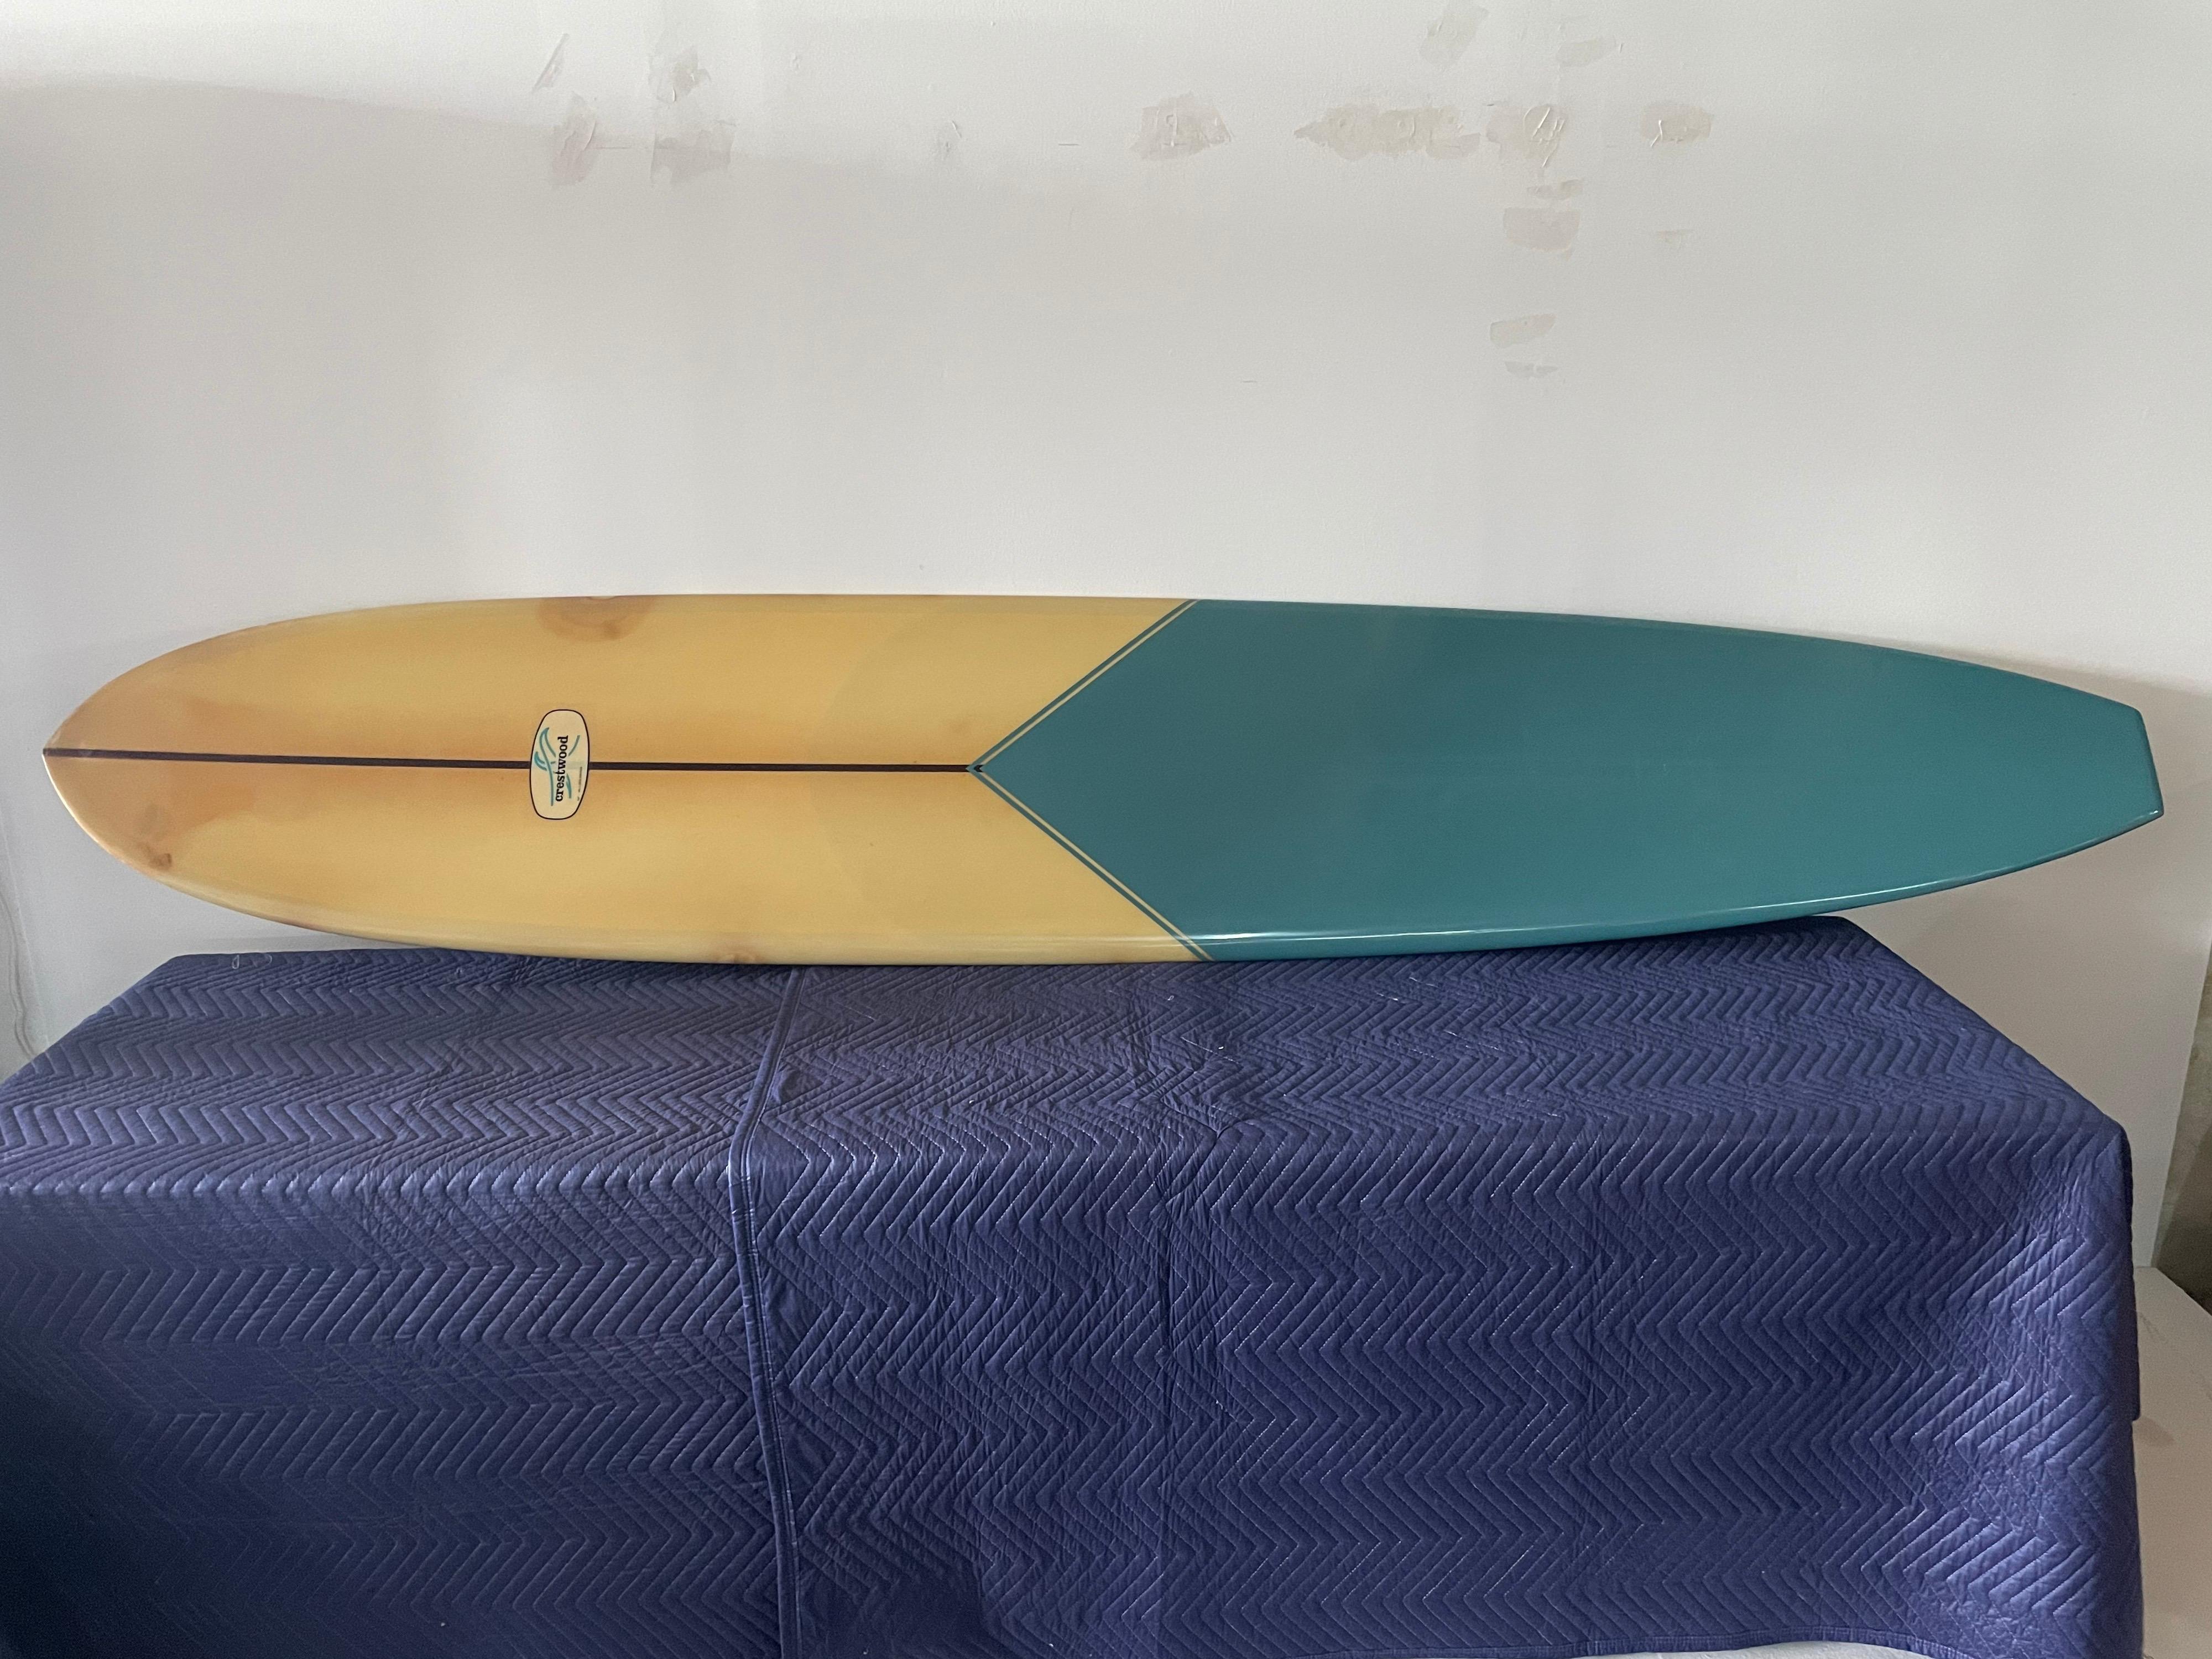 Fiberglass 1966 Vintage Crestwood Longboard / Surfboard by Billy Sautner